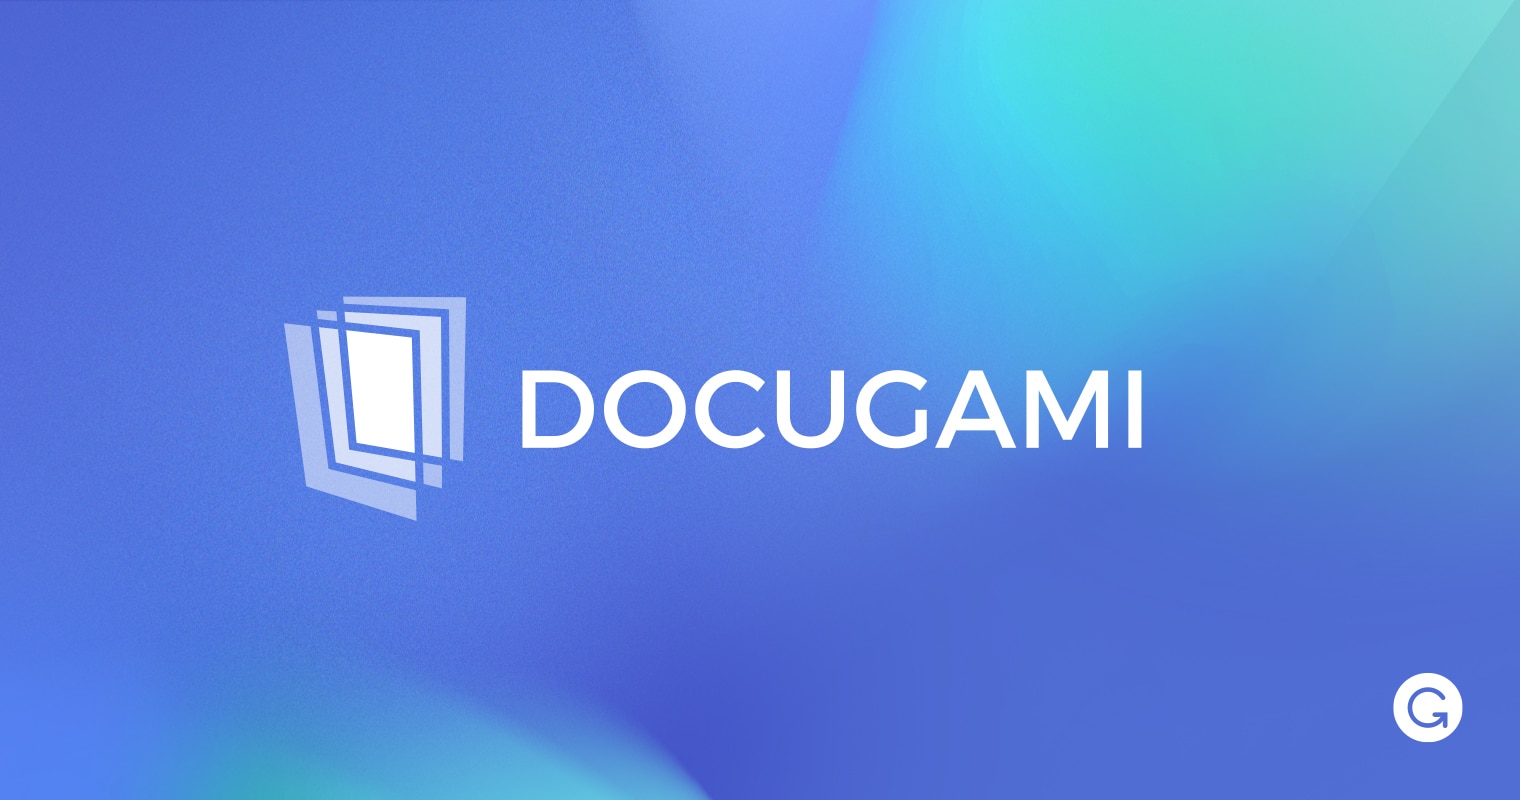 Docugami Announces $10 Million Investment Led by SignalFire